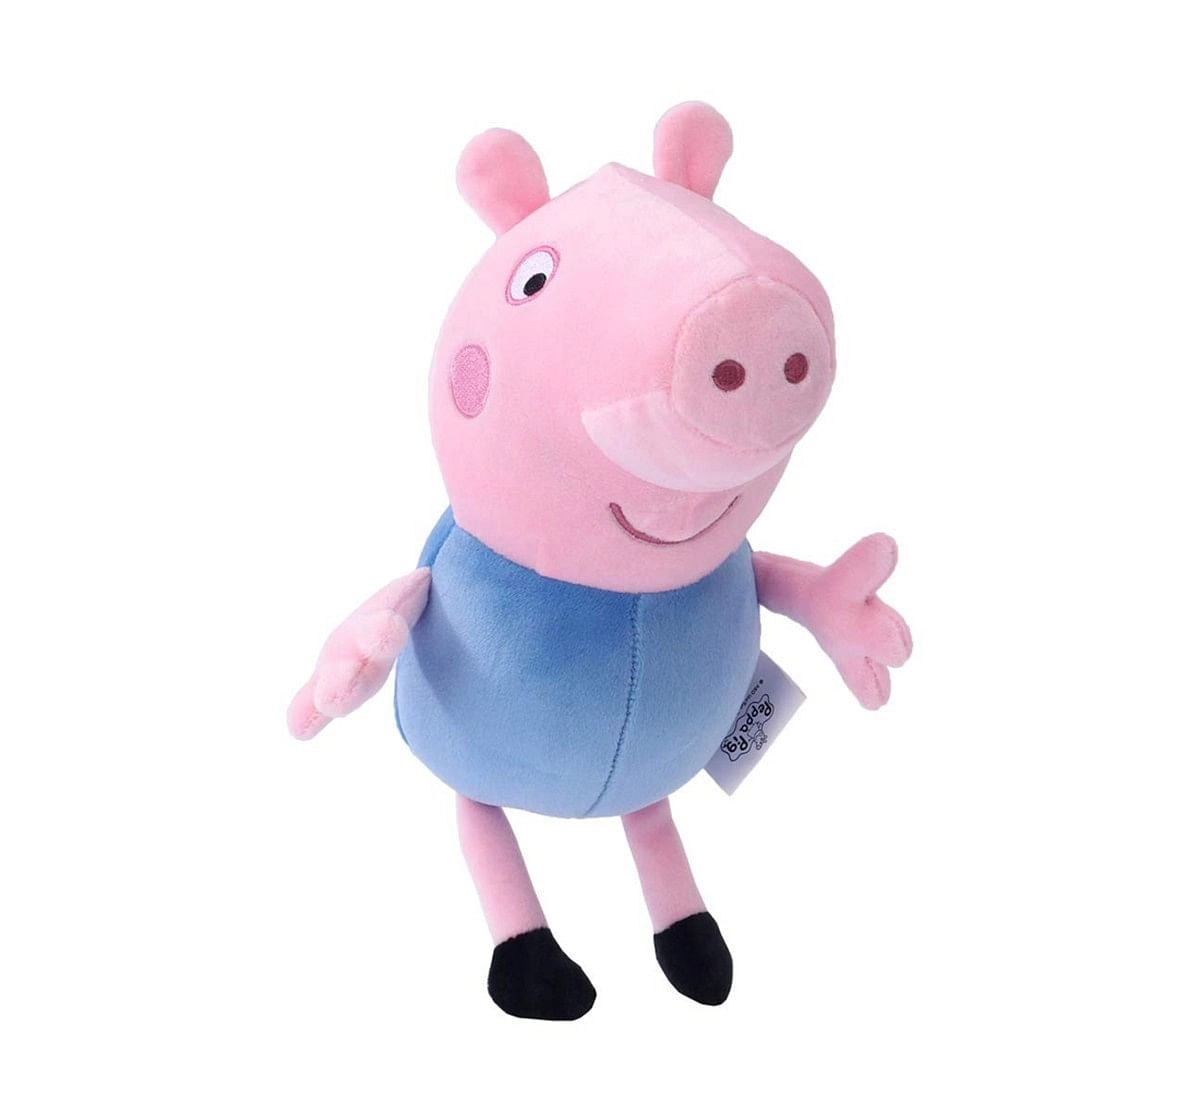 Peppa Pig George Super Soft Plush Toy for Kids age 1Y+ - 30 Cm 